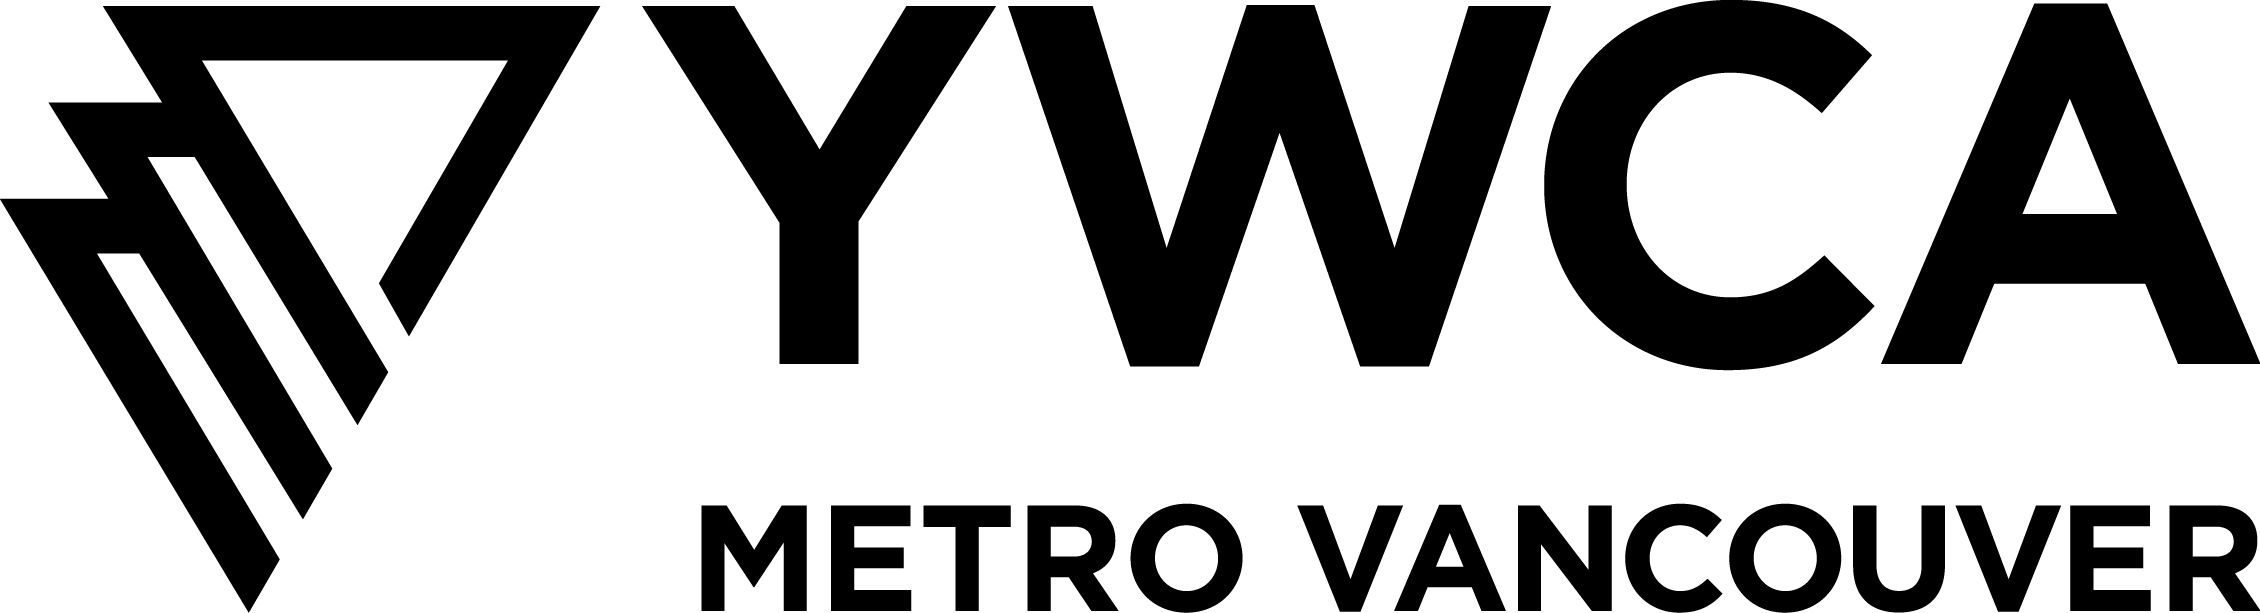 YWCA Metro Vancouver Logo